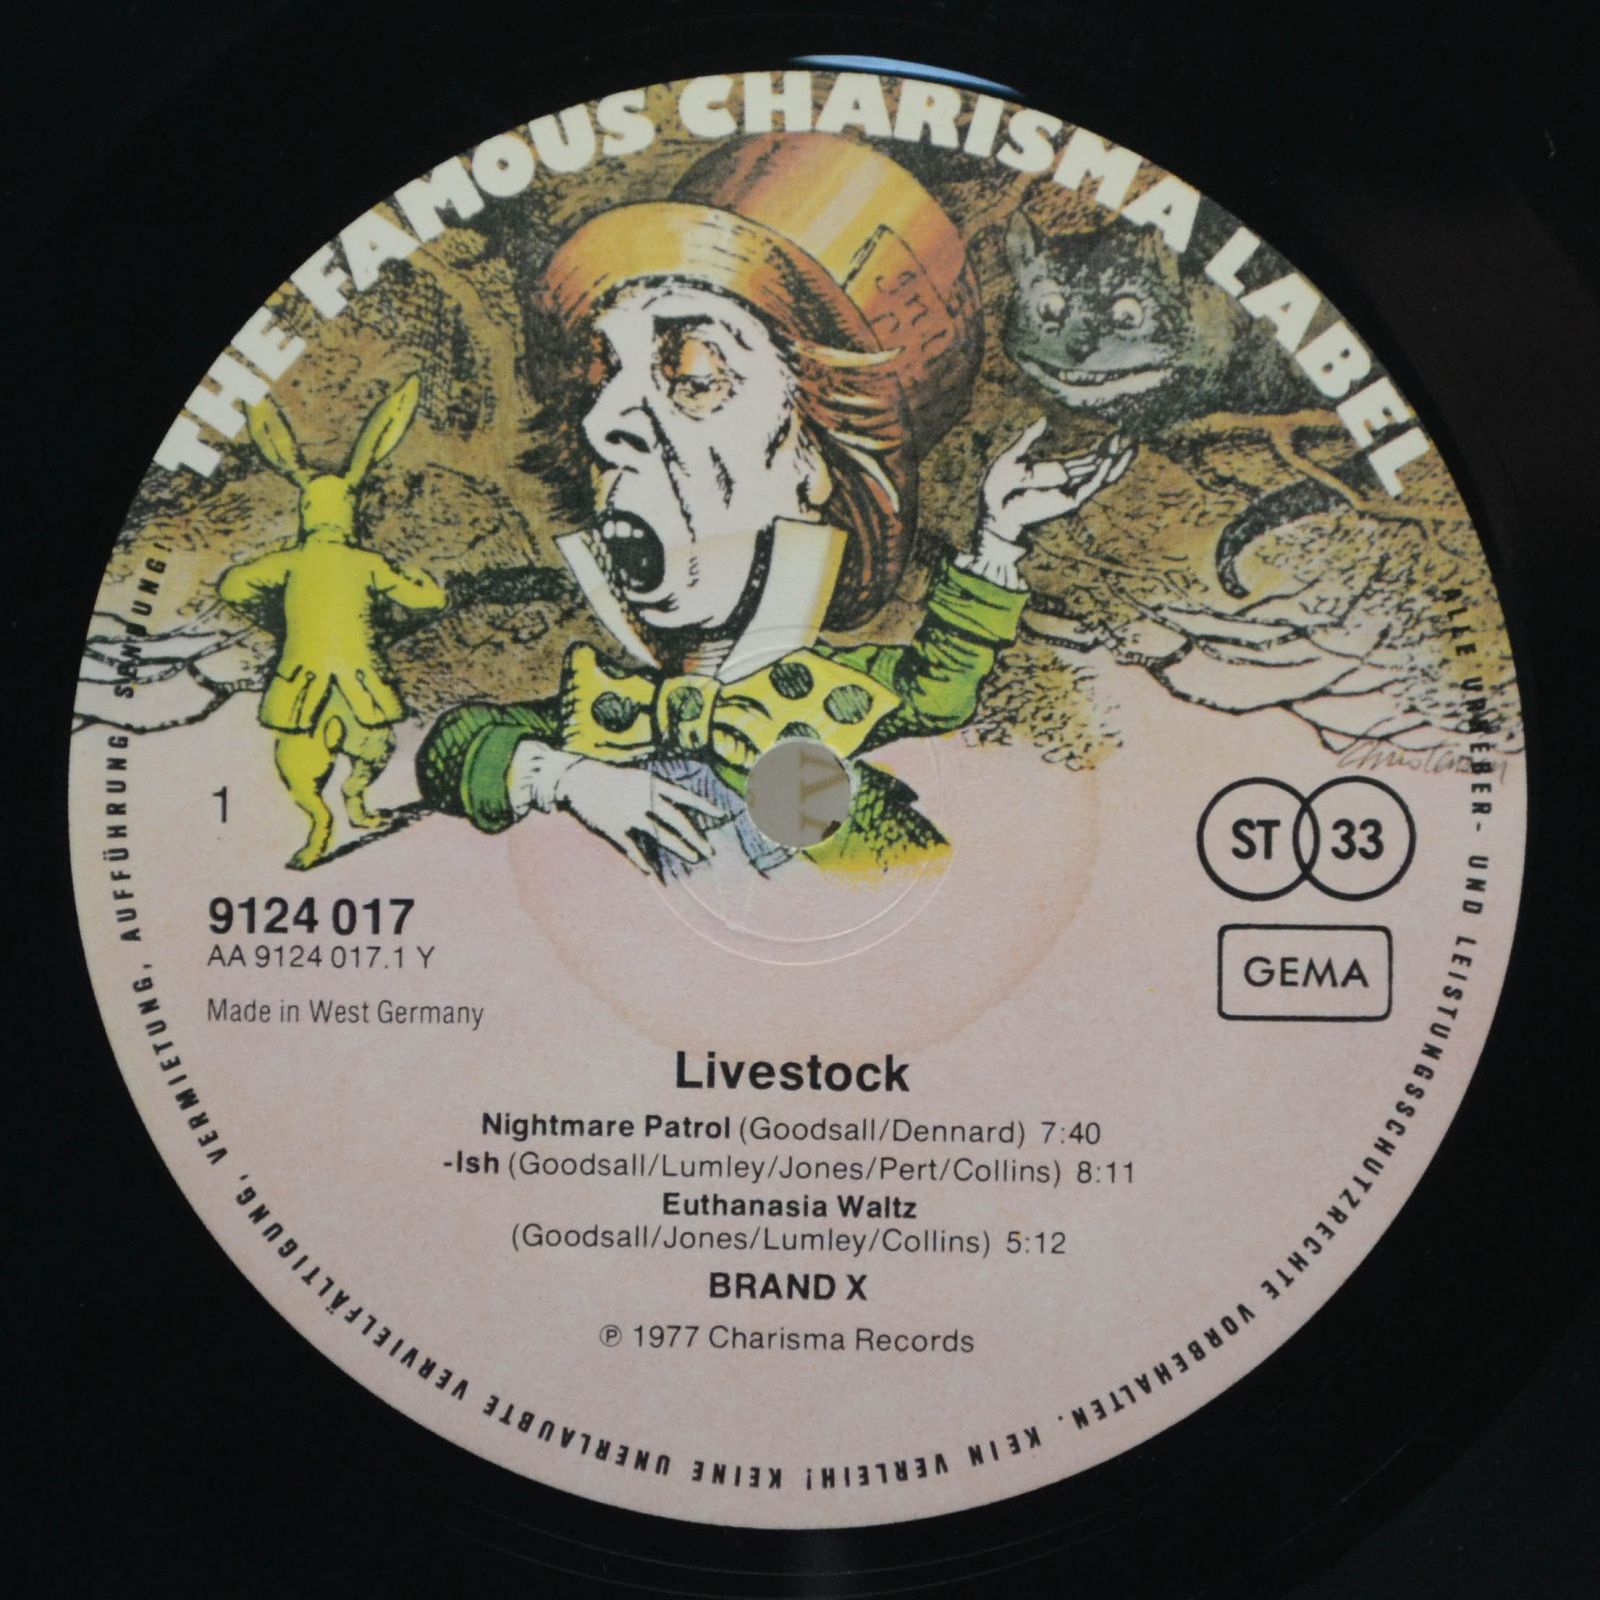 Brand X — Livestock, 1977